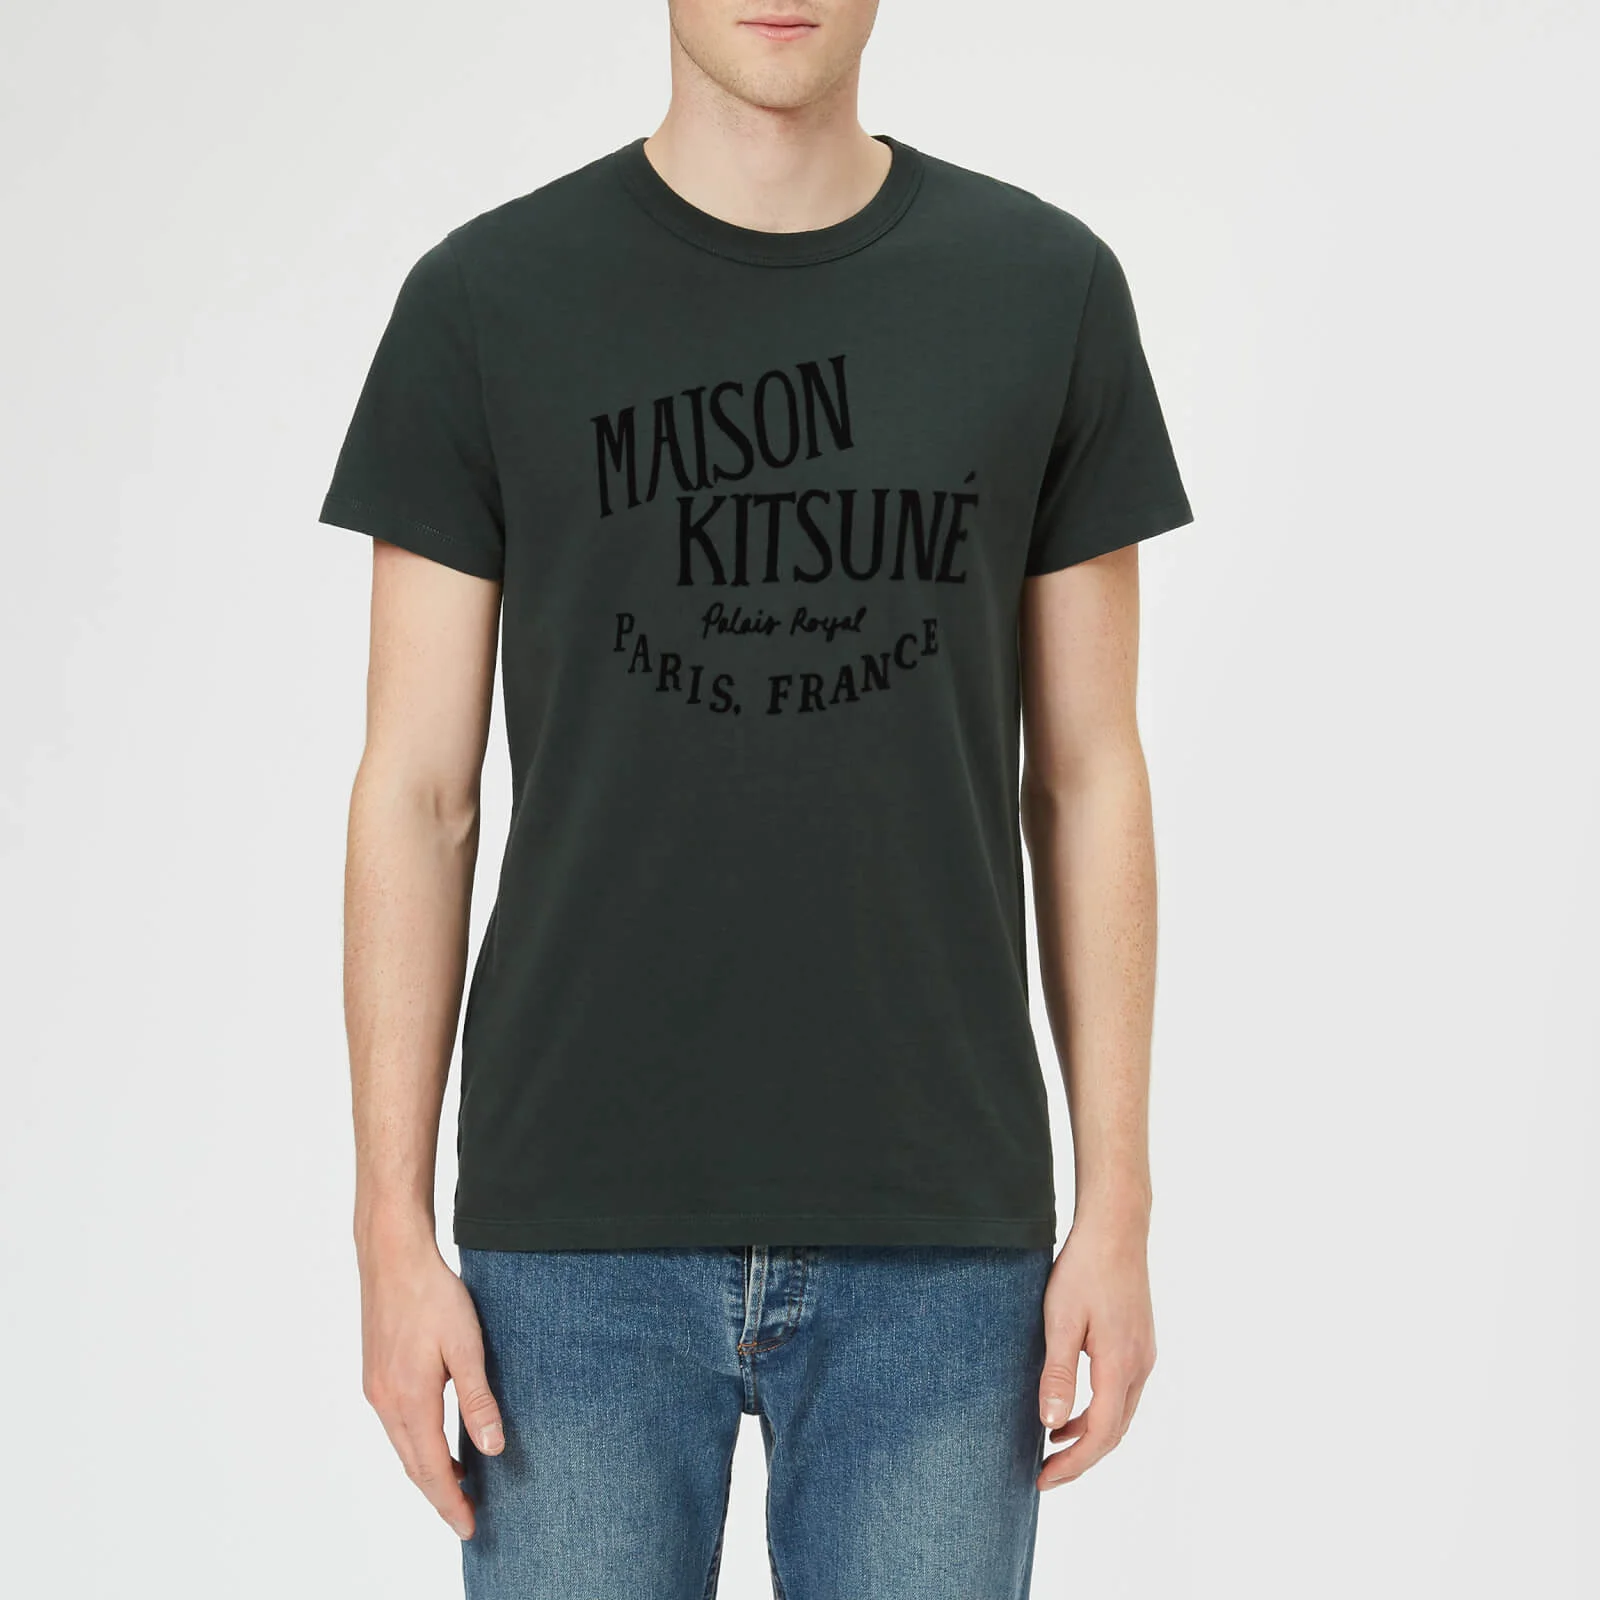 Maison Kitsuné Men's Palais Royal Crew Neck T-Shirt - Dark Green Image 1